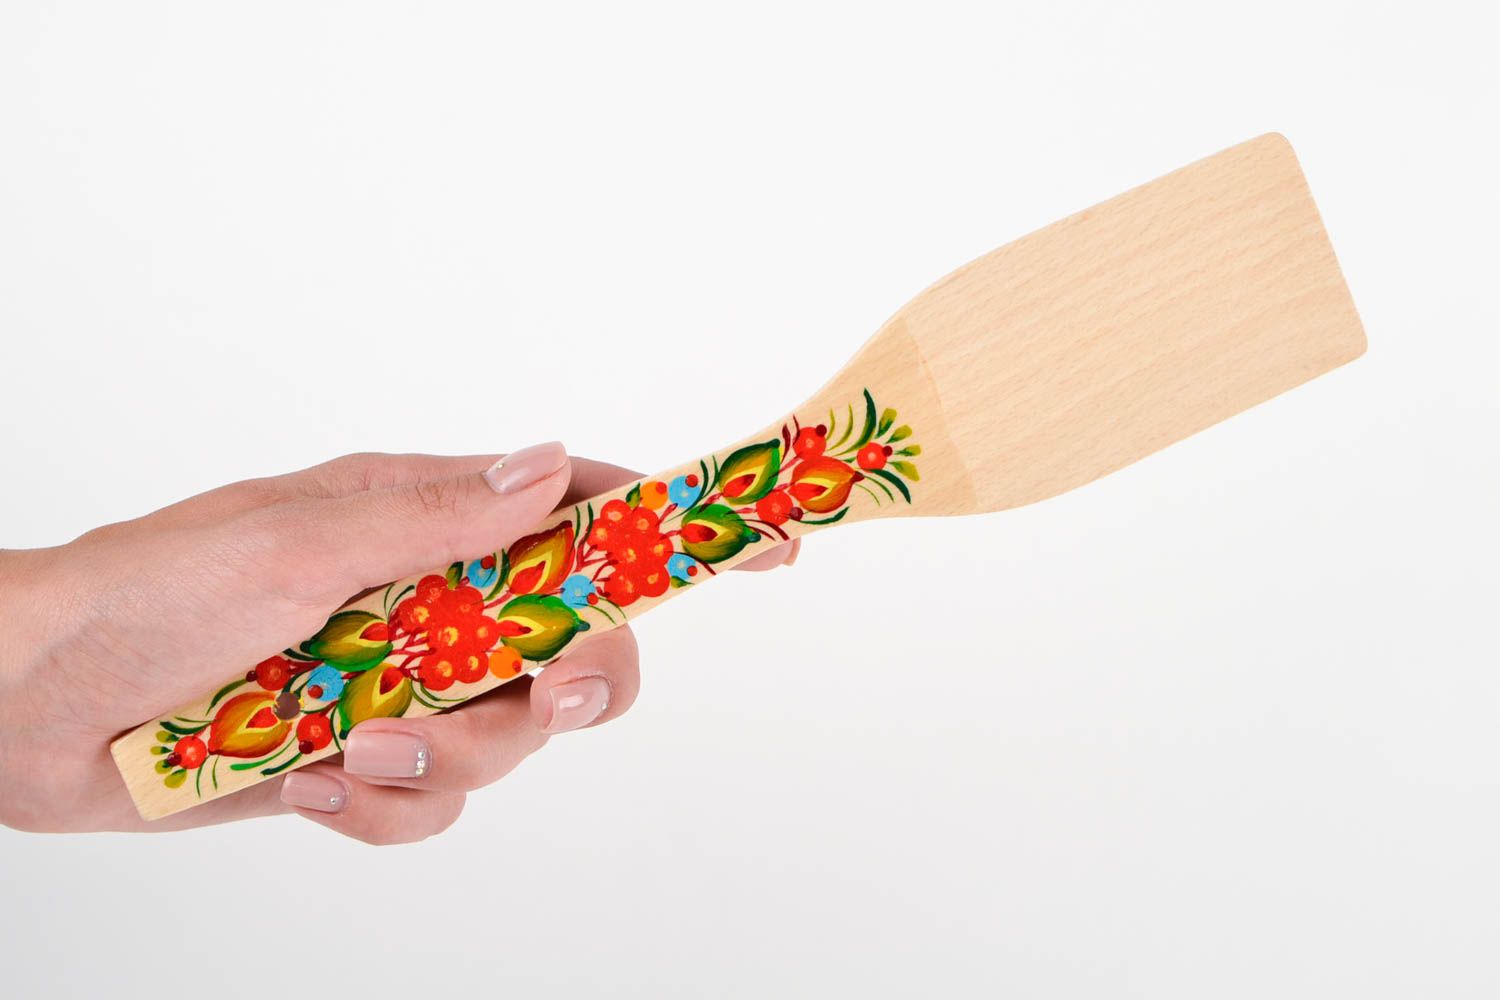 Handmade wooden spatula cooking tools kitchen utensils wood craft ideas photo 2